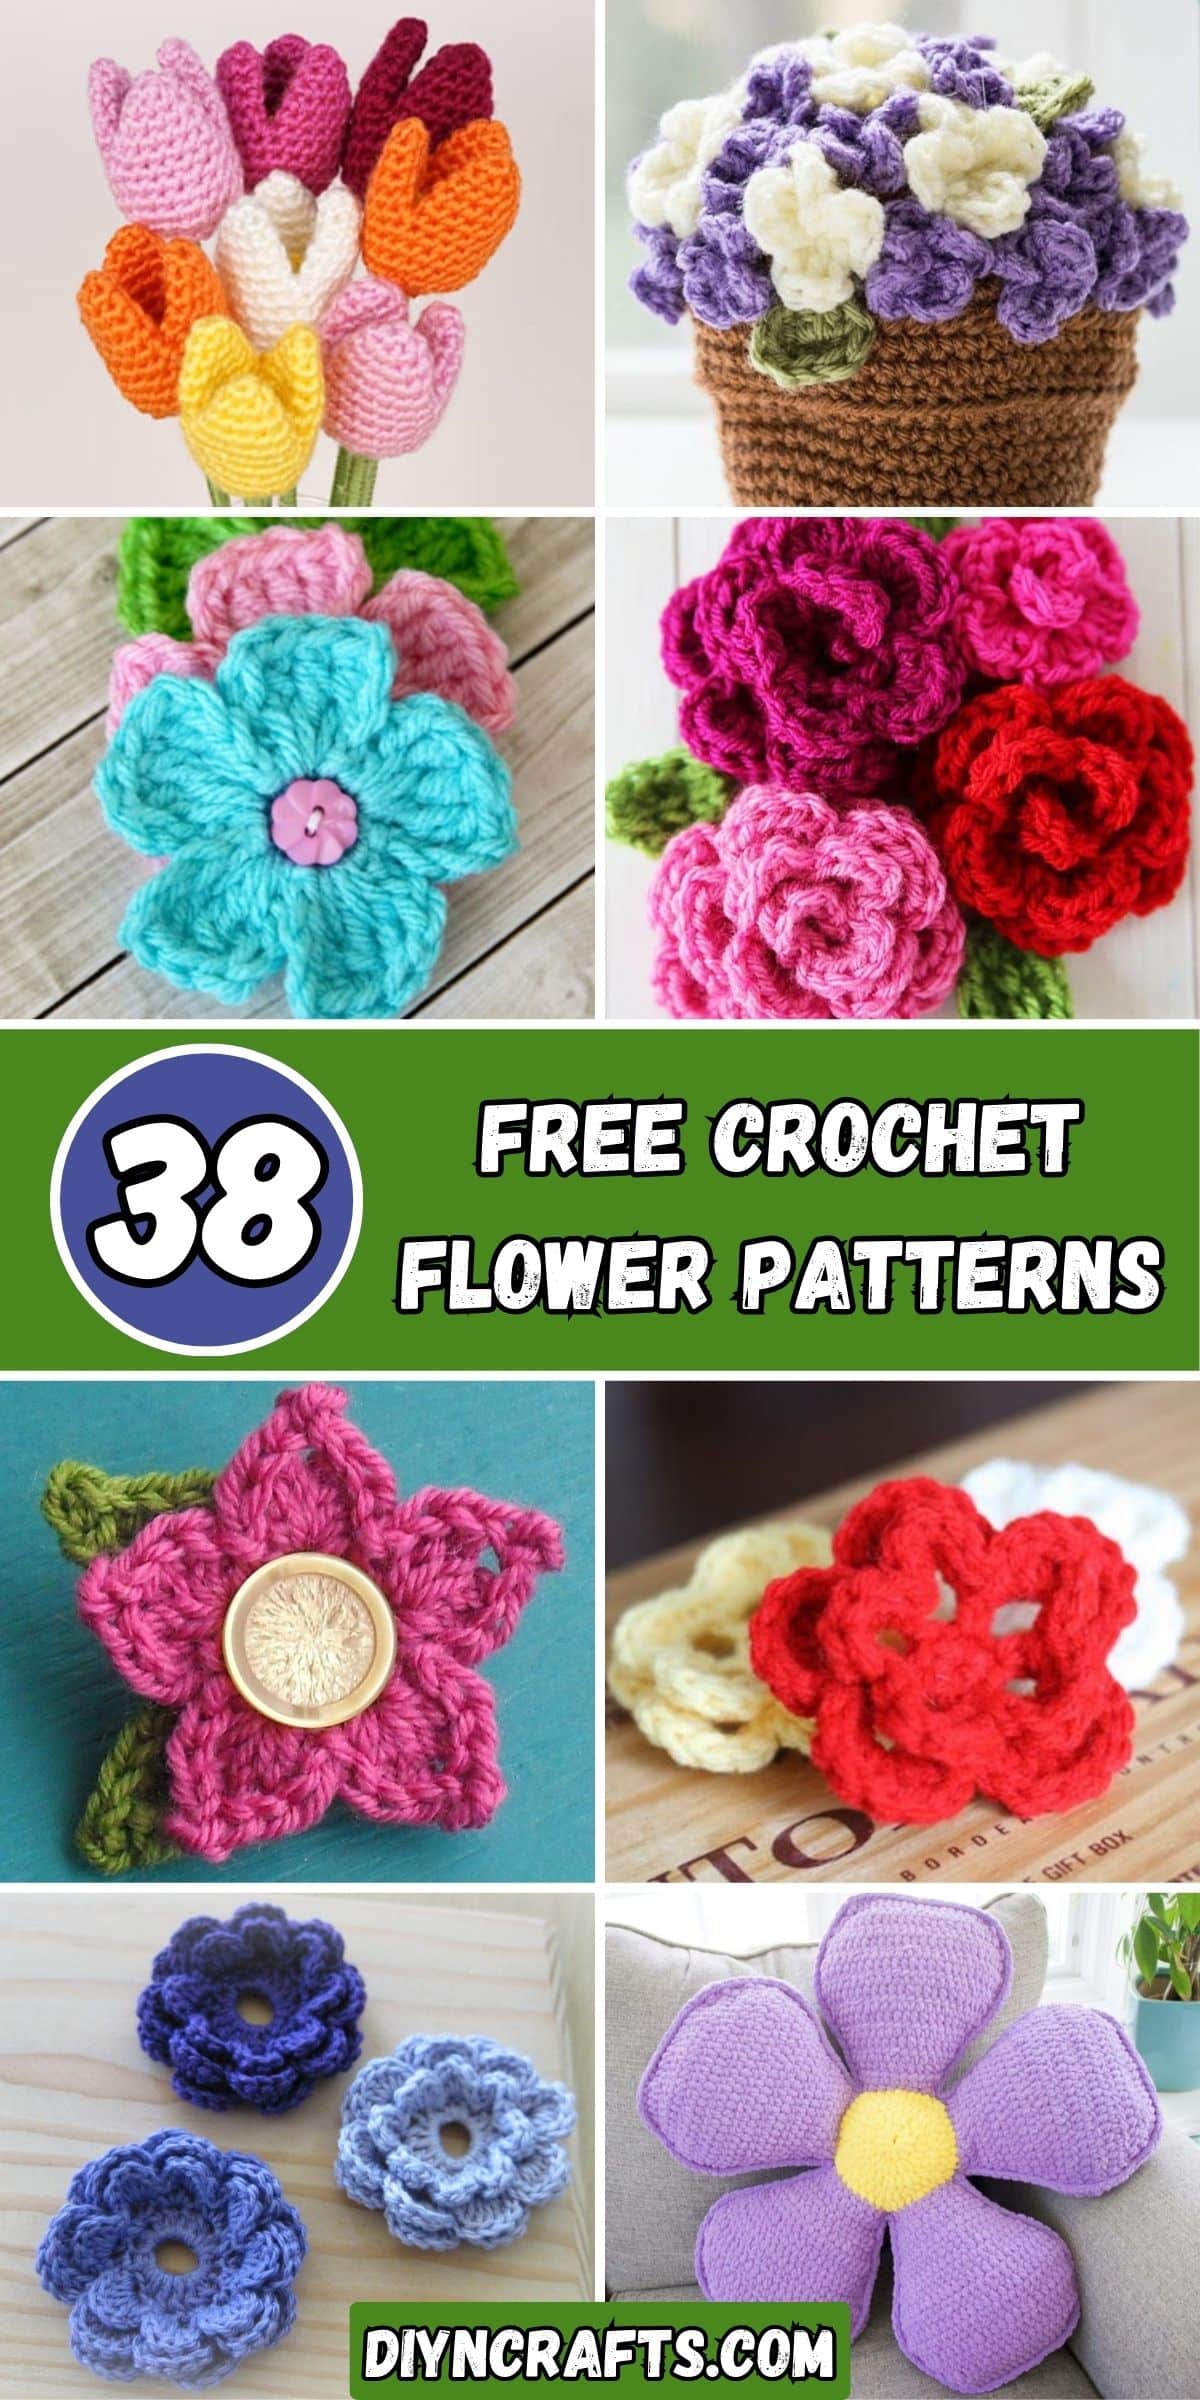 38 Free Crochet Flower Patterns collage.